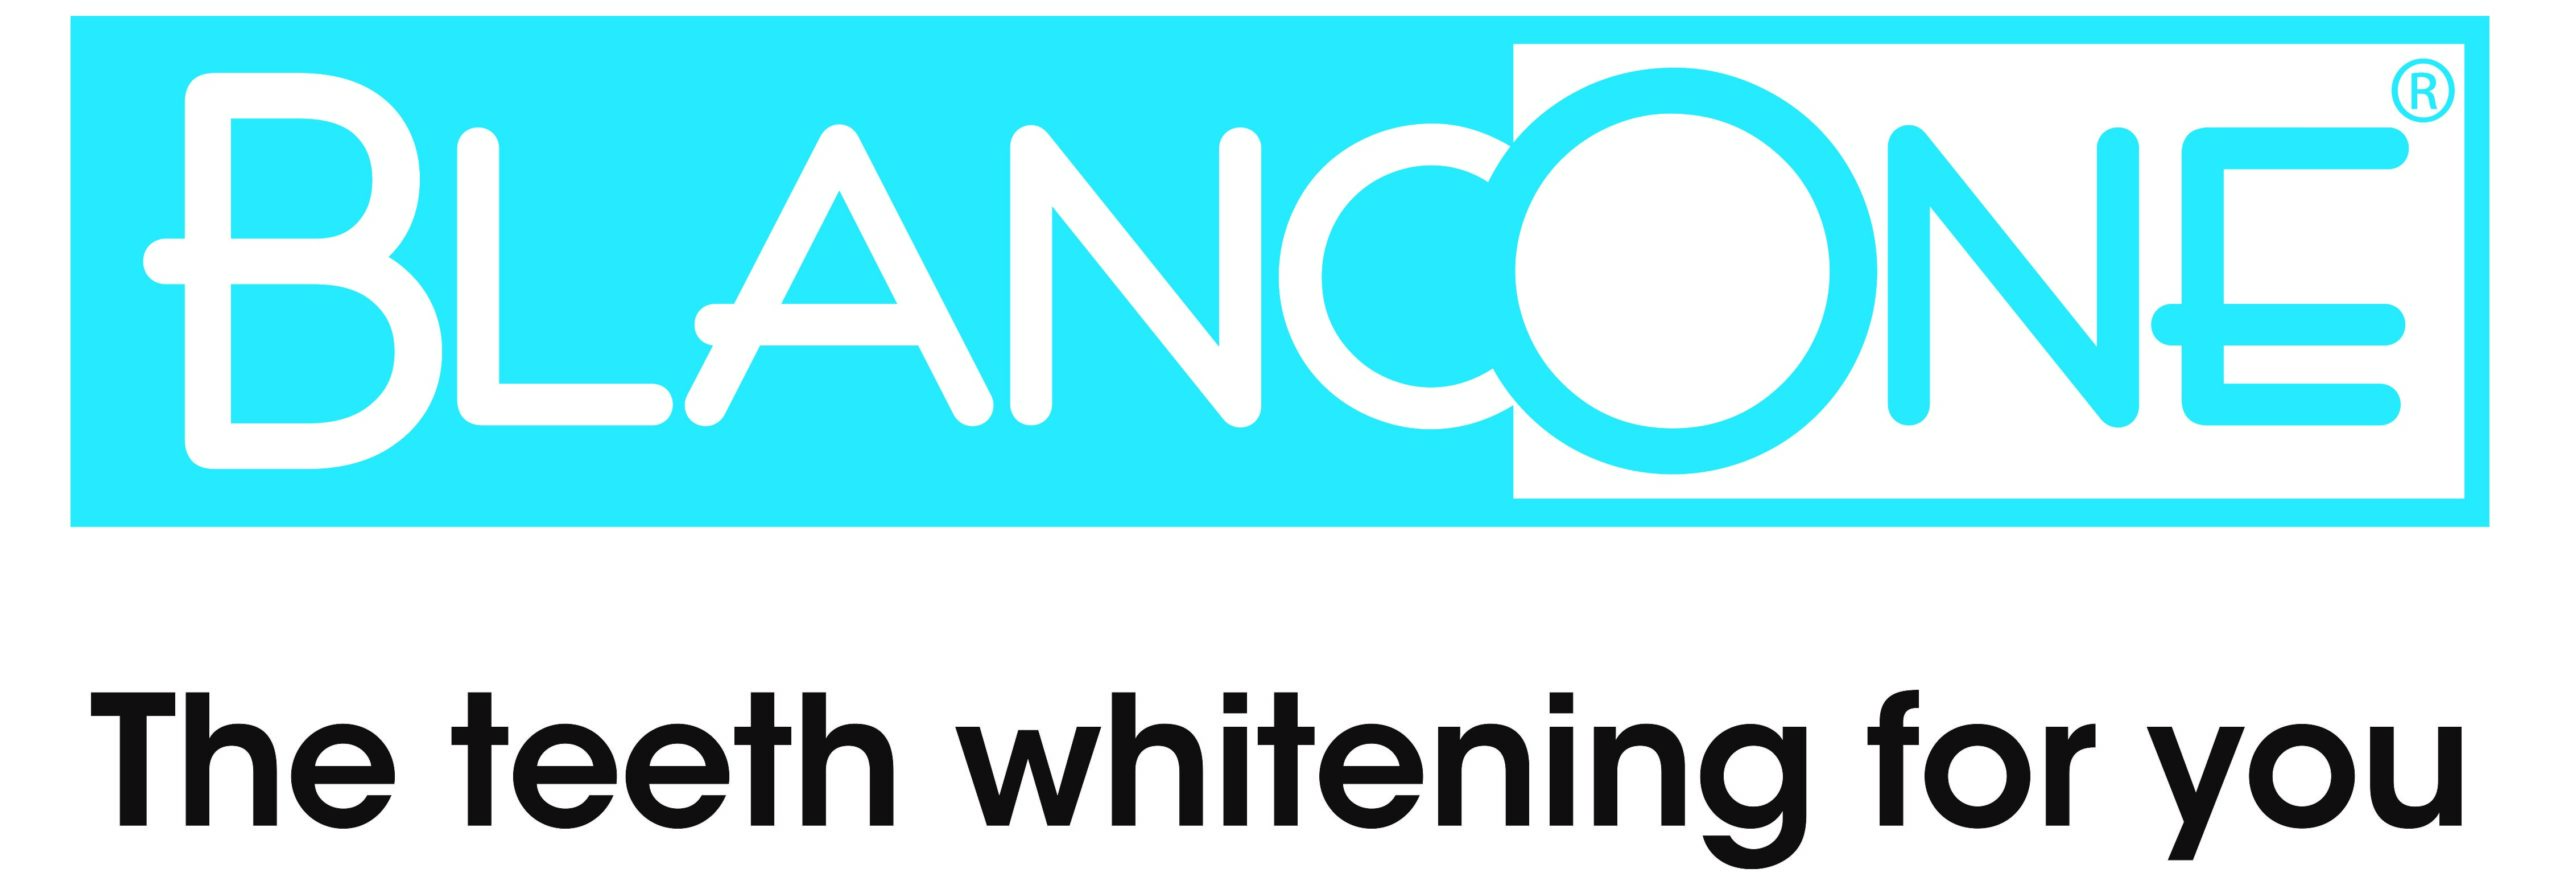 blancone logo